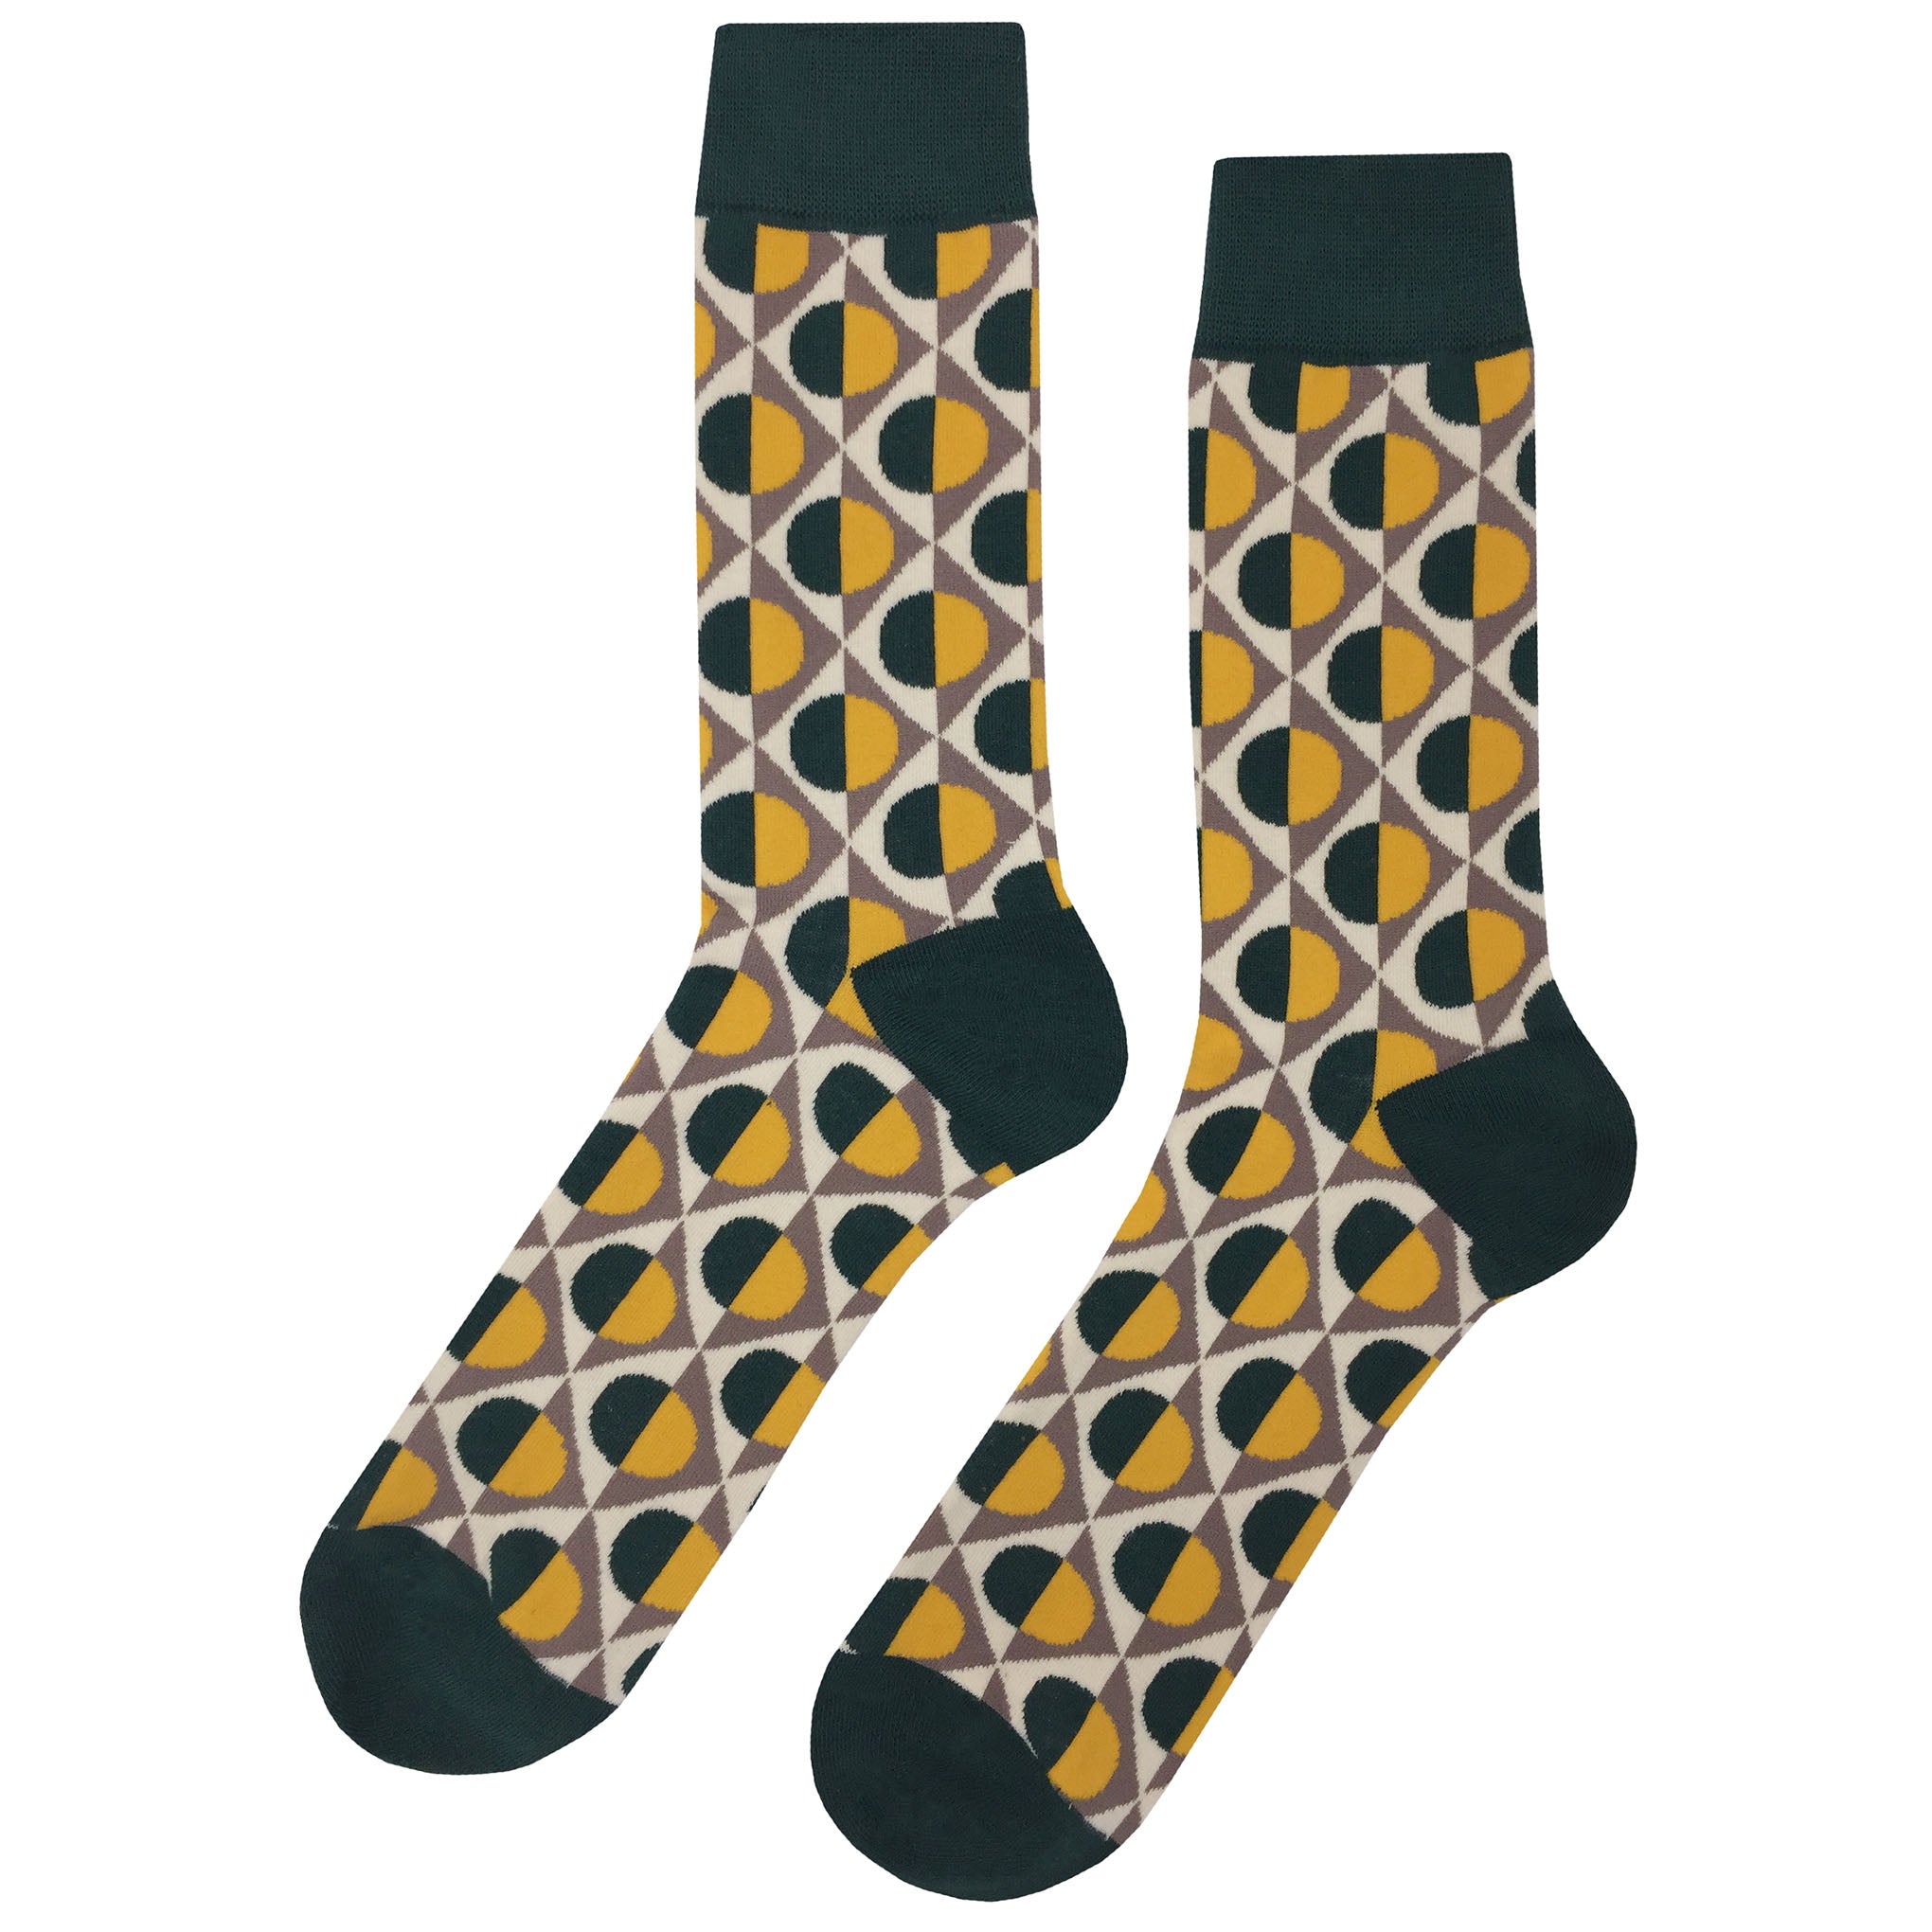 Modern Smooth Socks - Fun and Crazy Socks at Sockfly.com